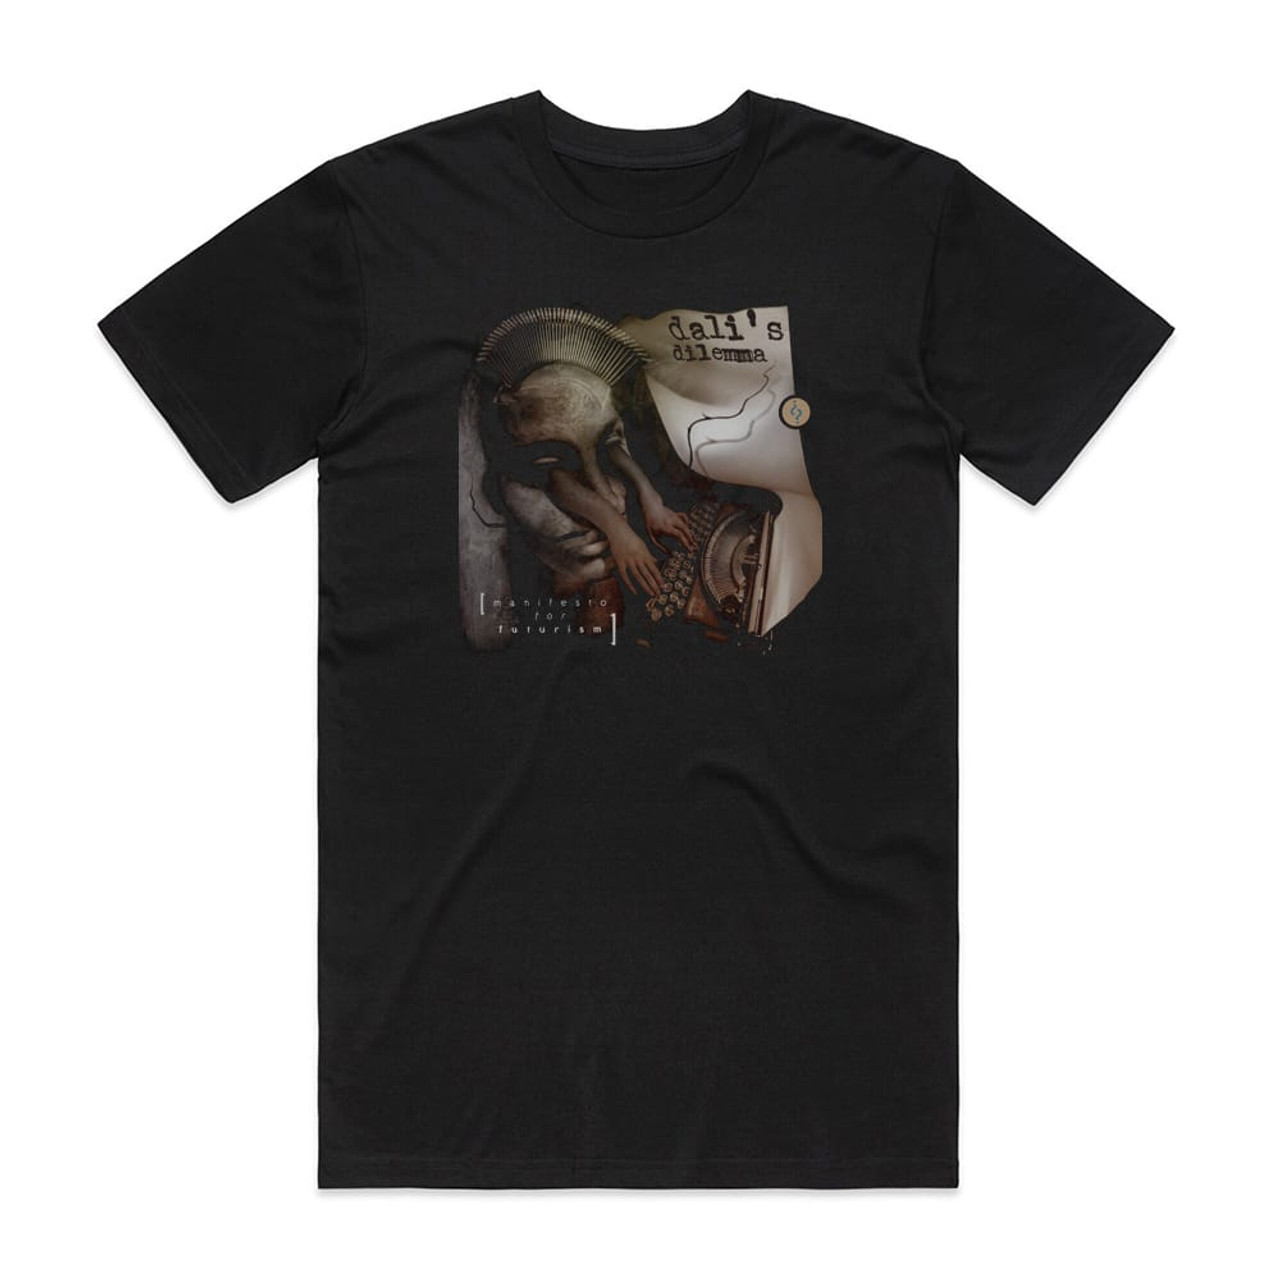 Dalis Dilemma Manifesto For Futurism Album Cover T-Shirt Black